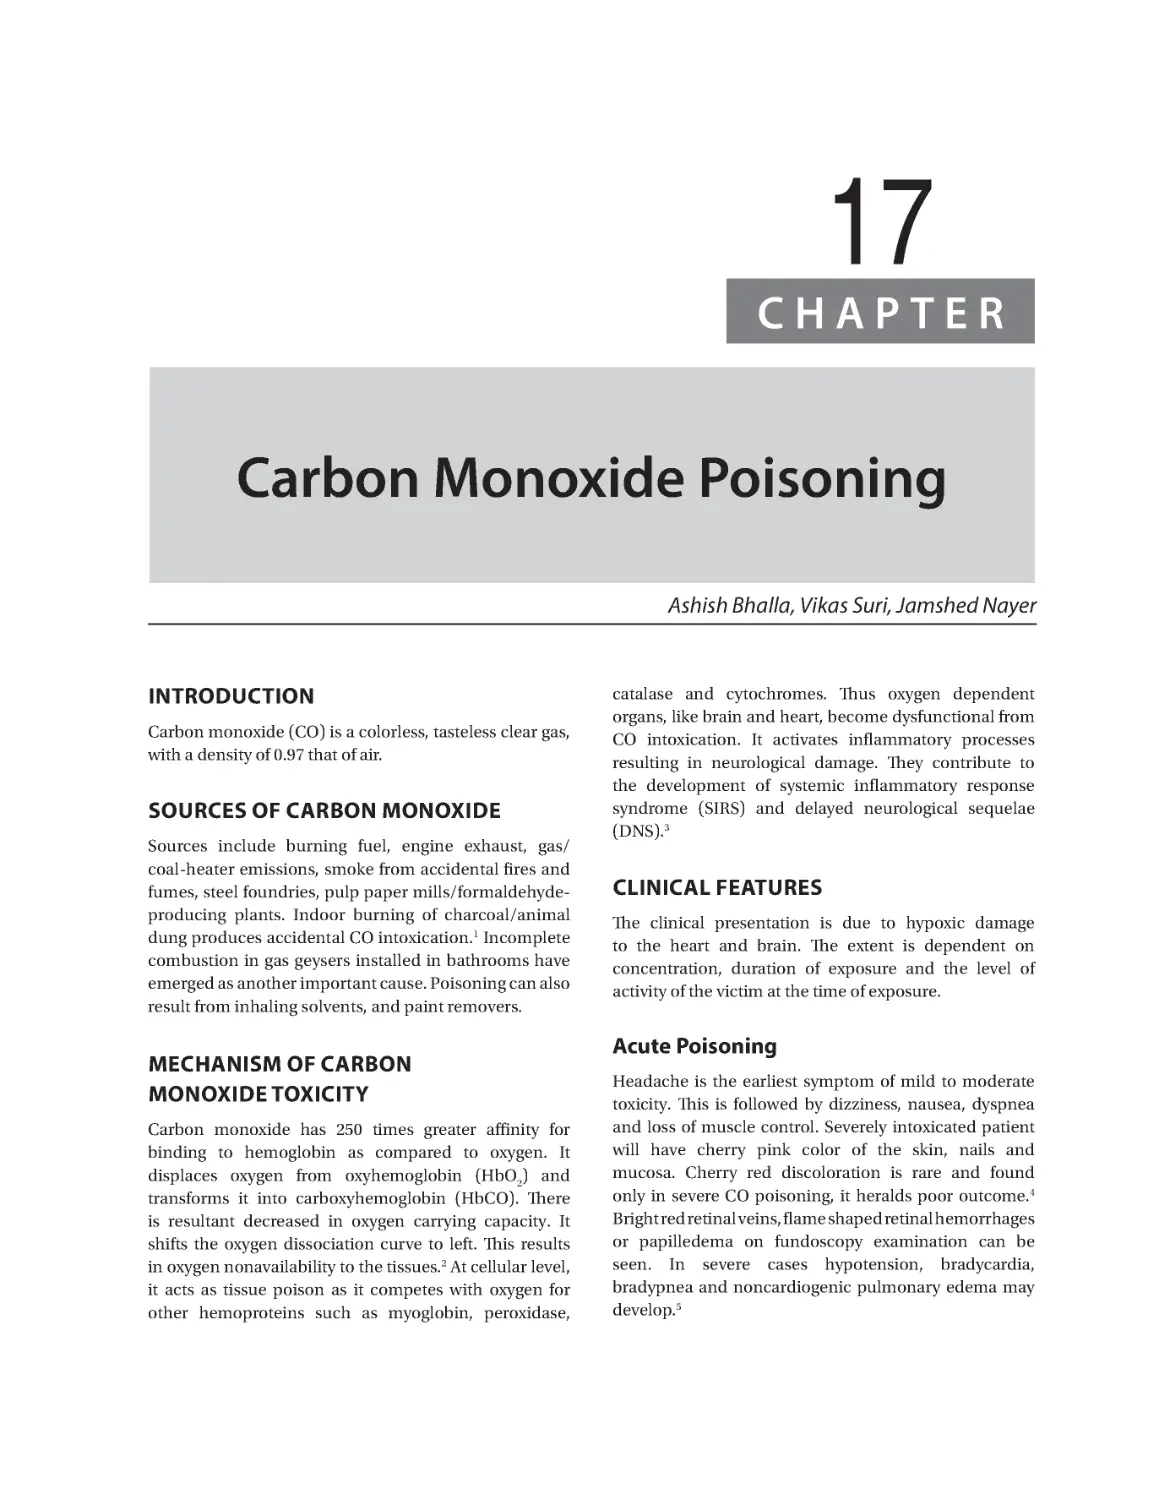 Chapter 17: Carbon Monoxide Poisoning